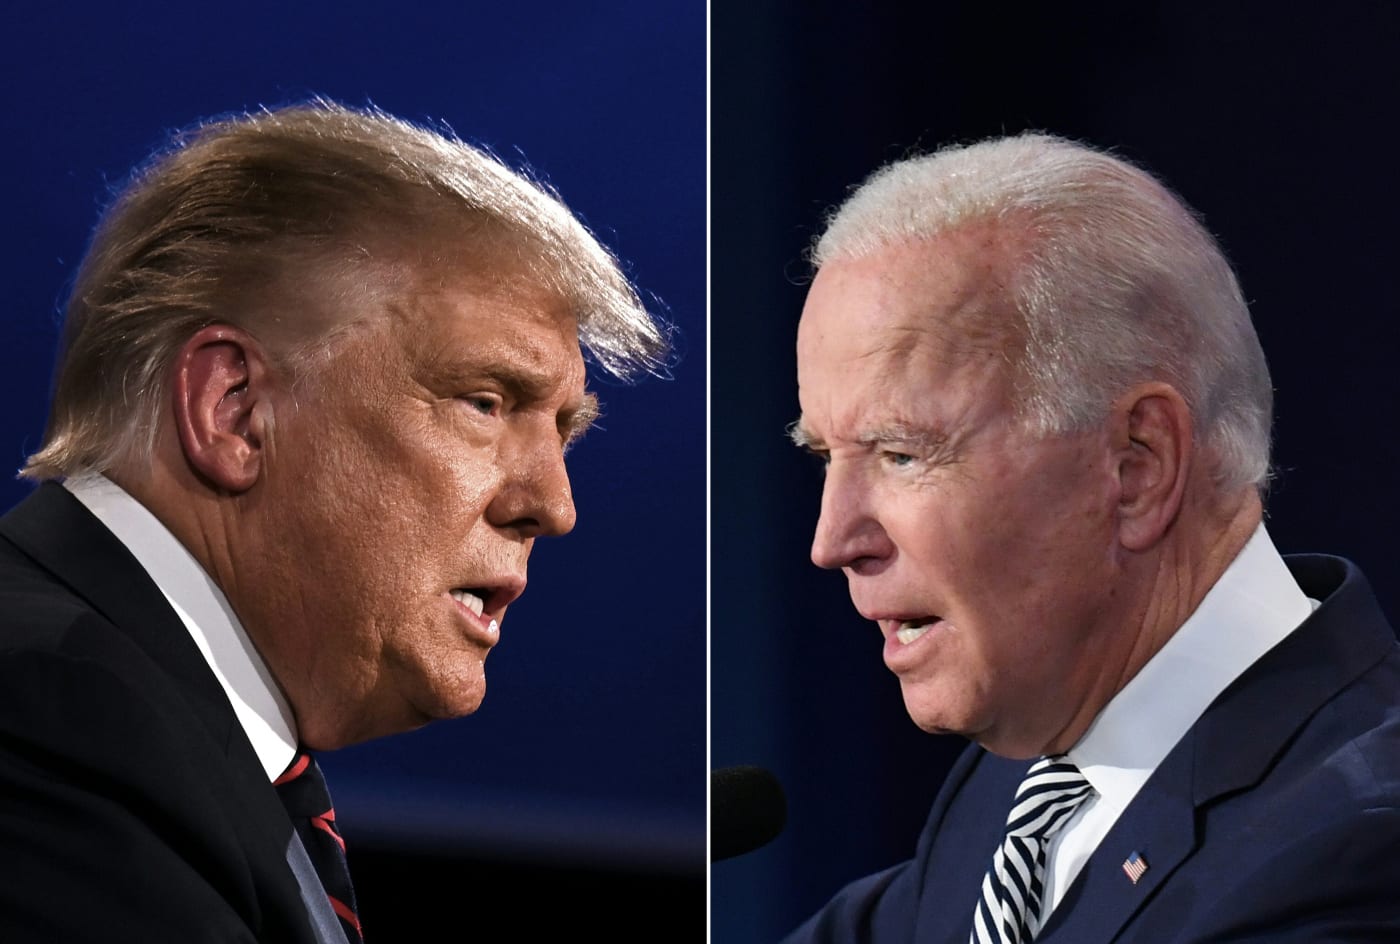 Trump and Biden First Presidential Debate